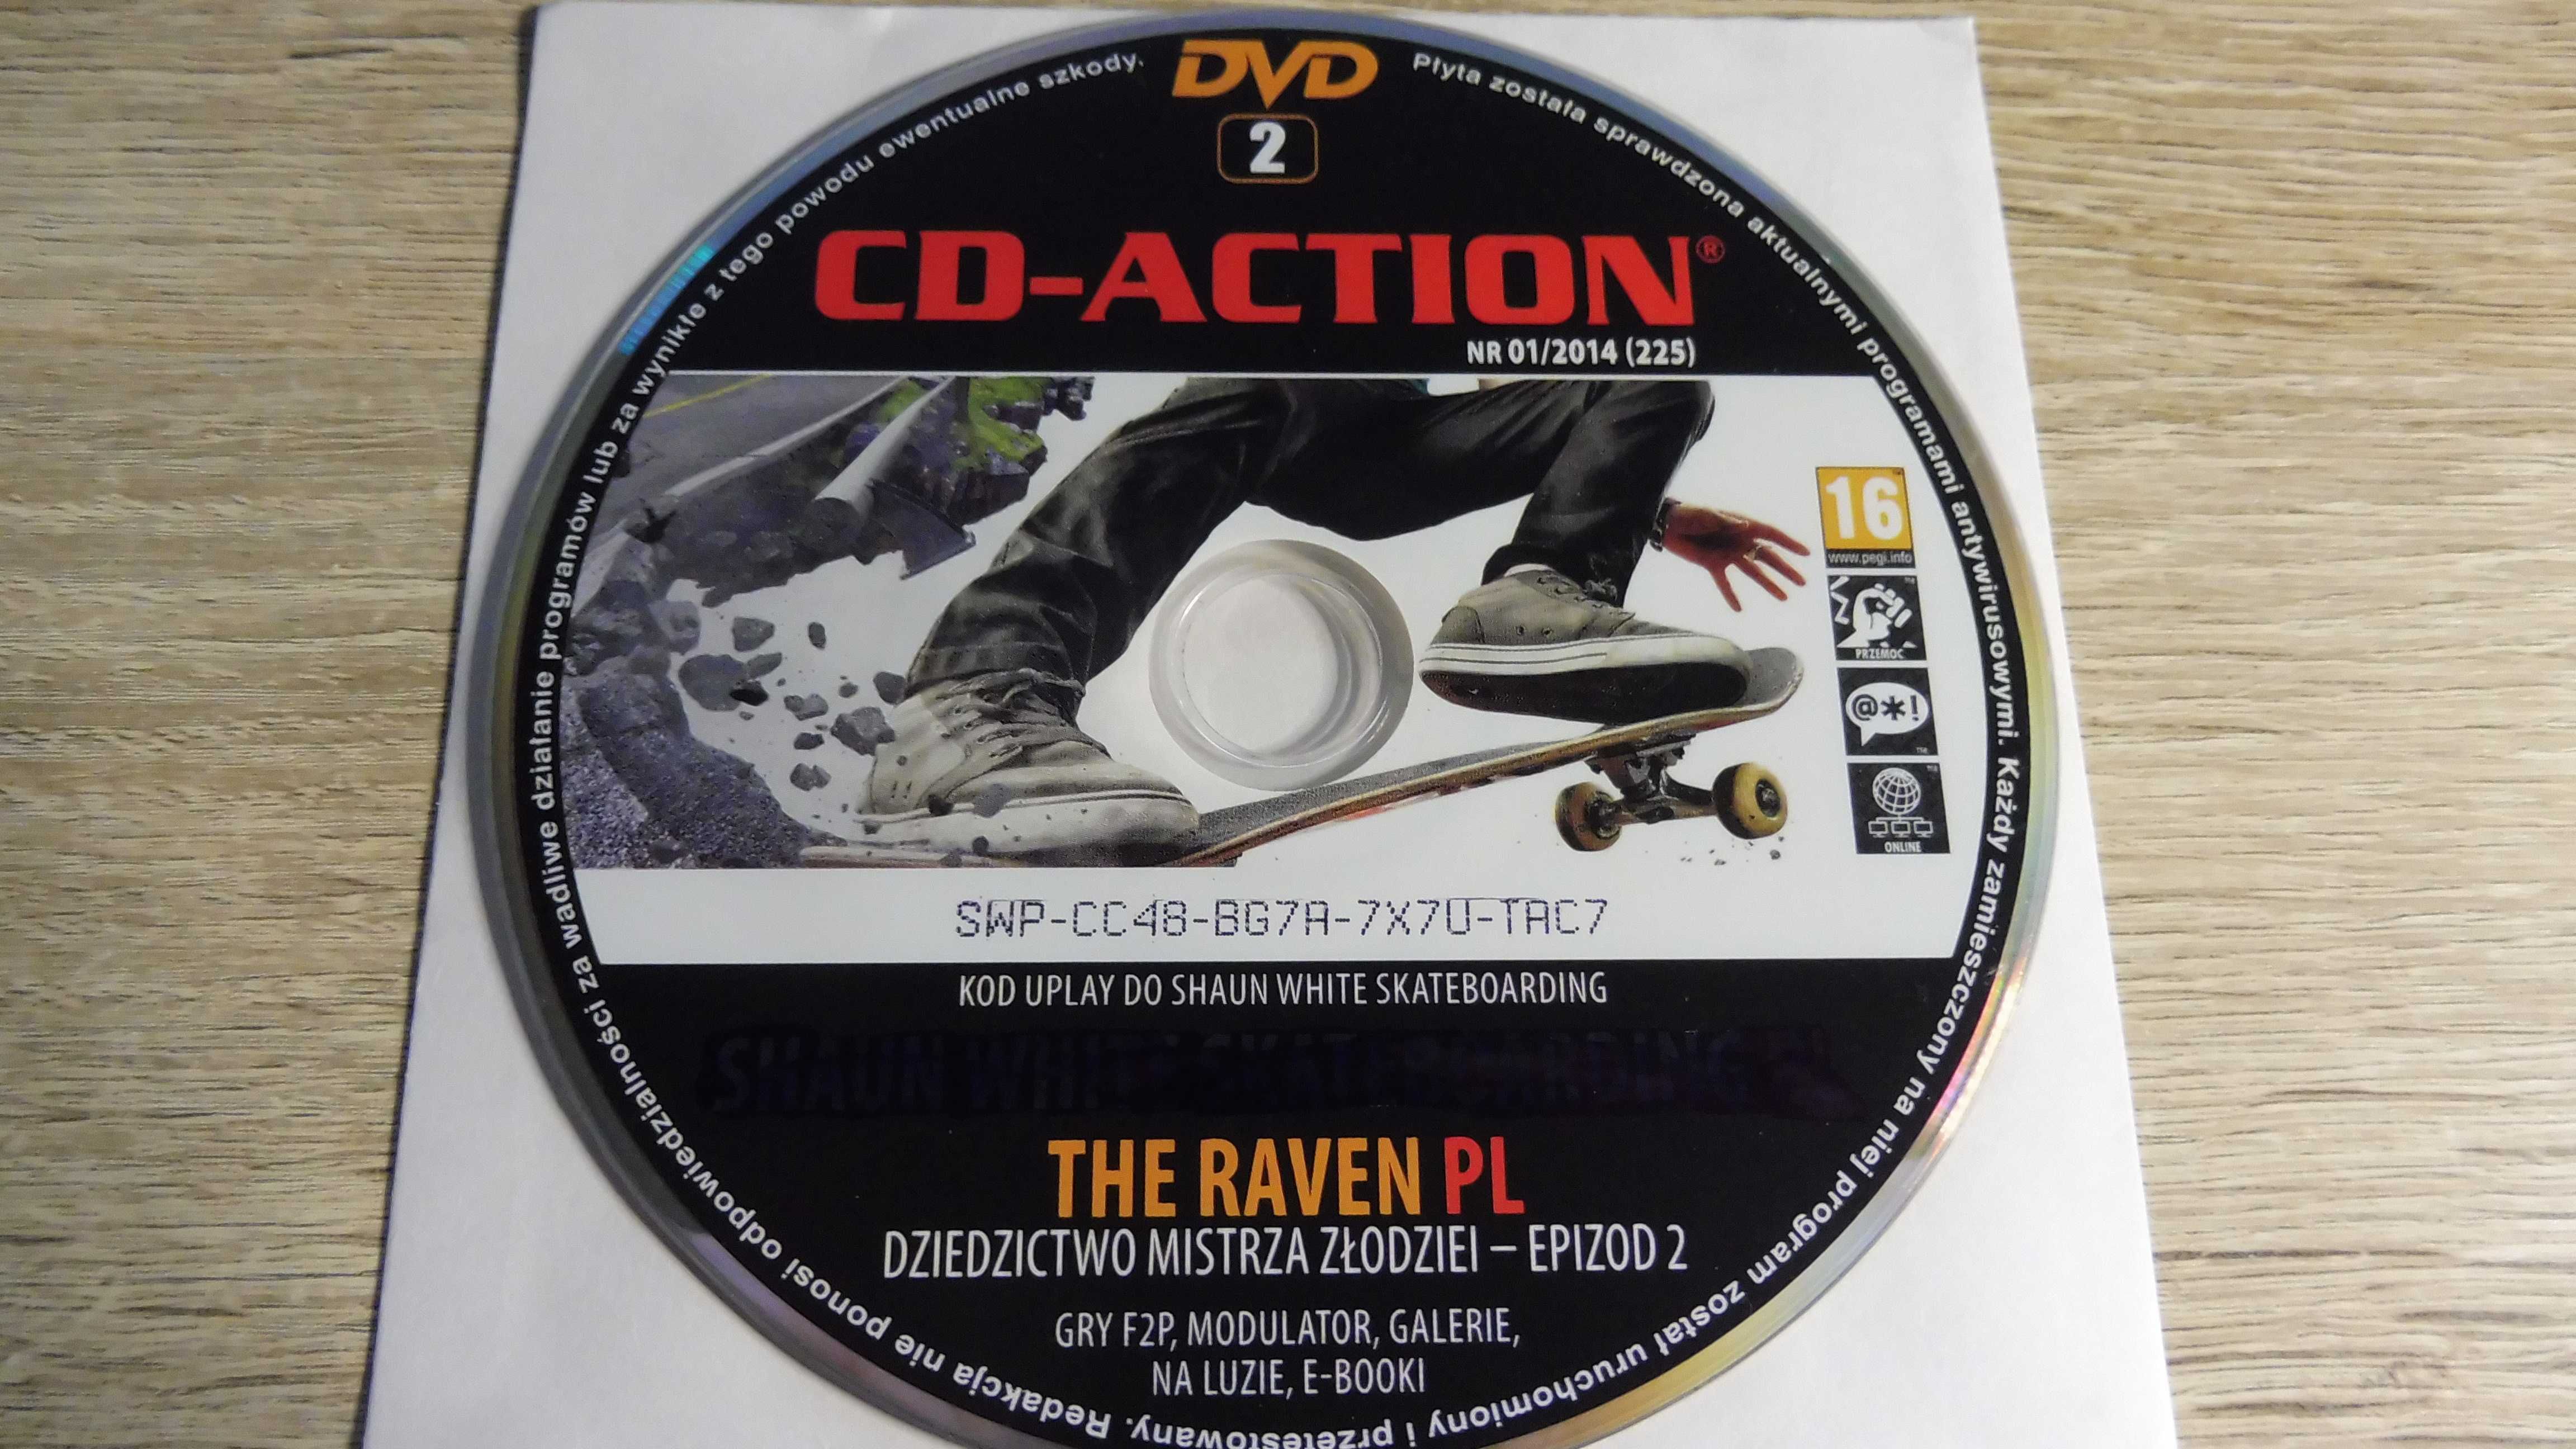 CD Action 01/2014 (225) - Raven Episod 2